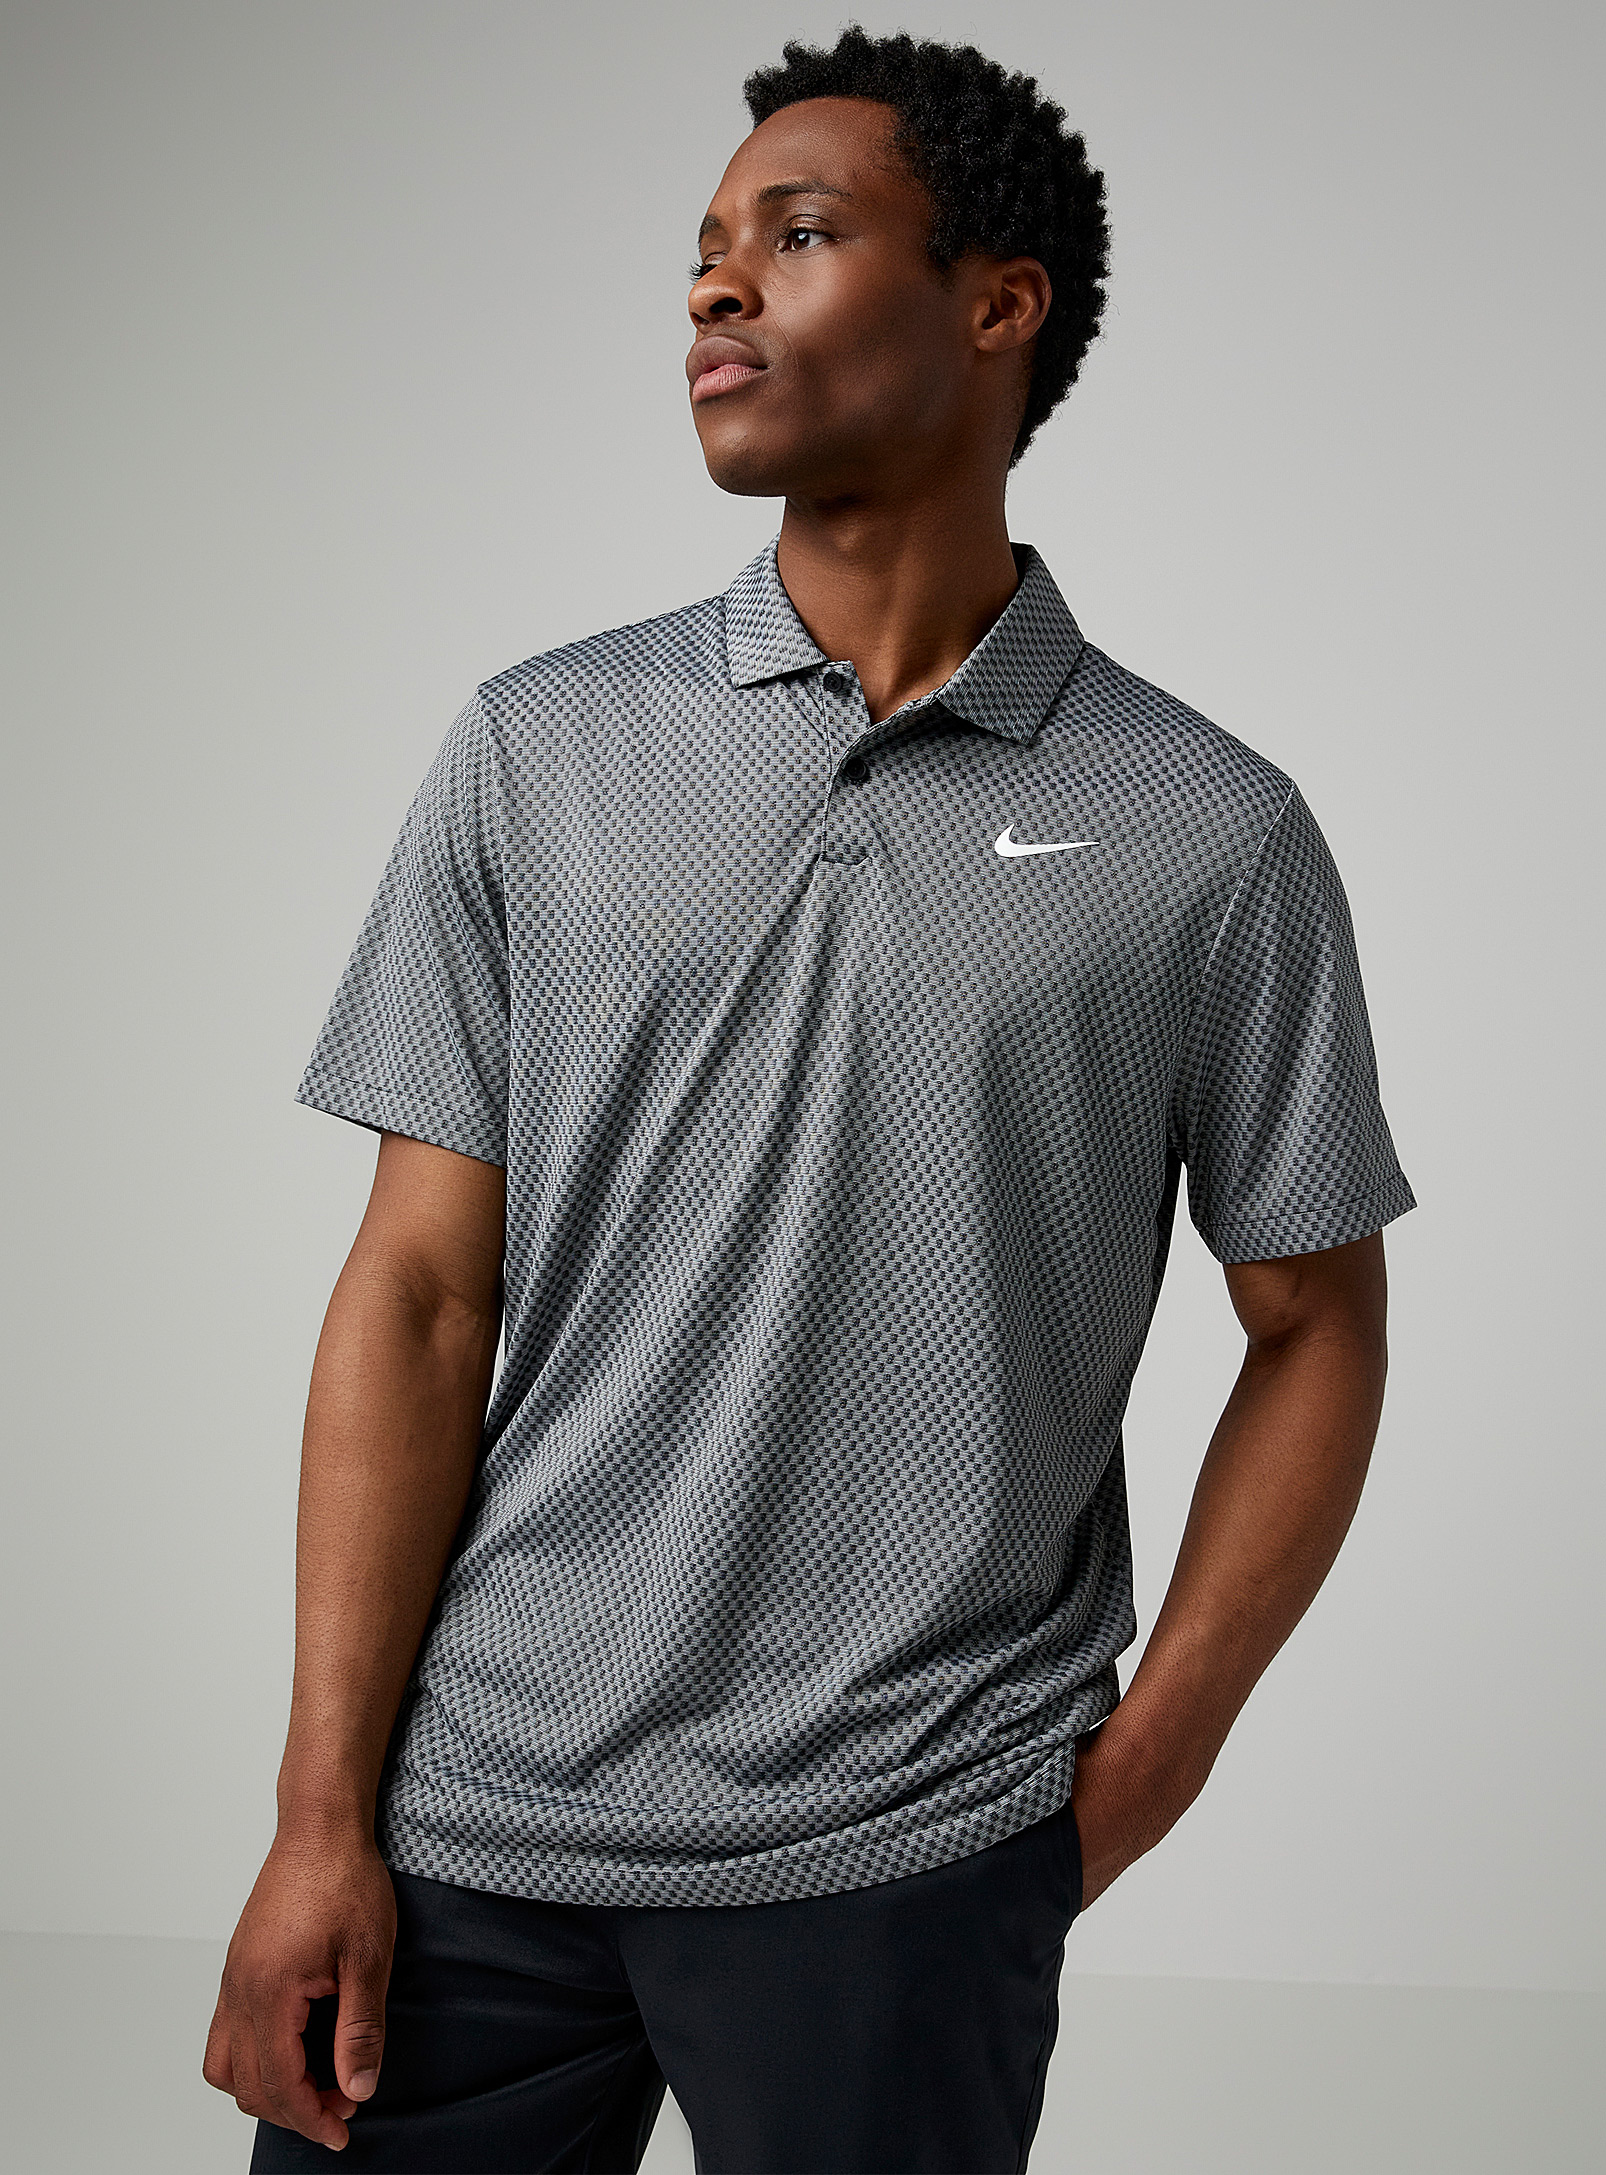 Nike golf - Men's Blurred-check jacquard Polo Shirt